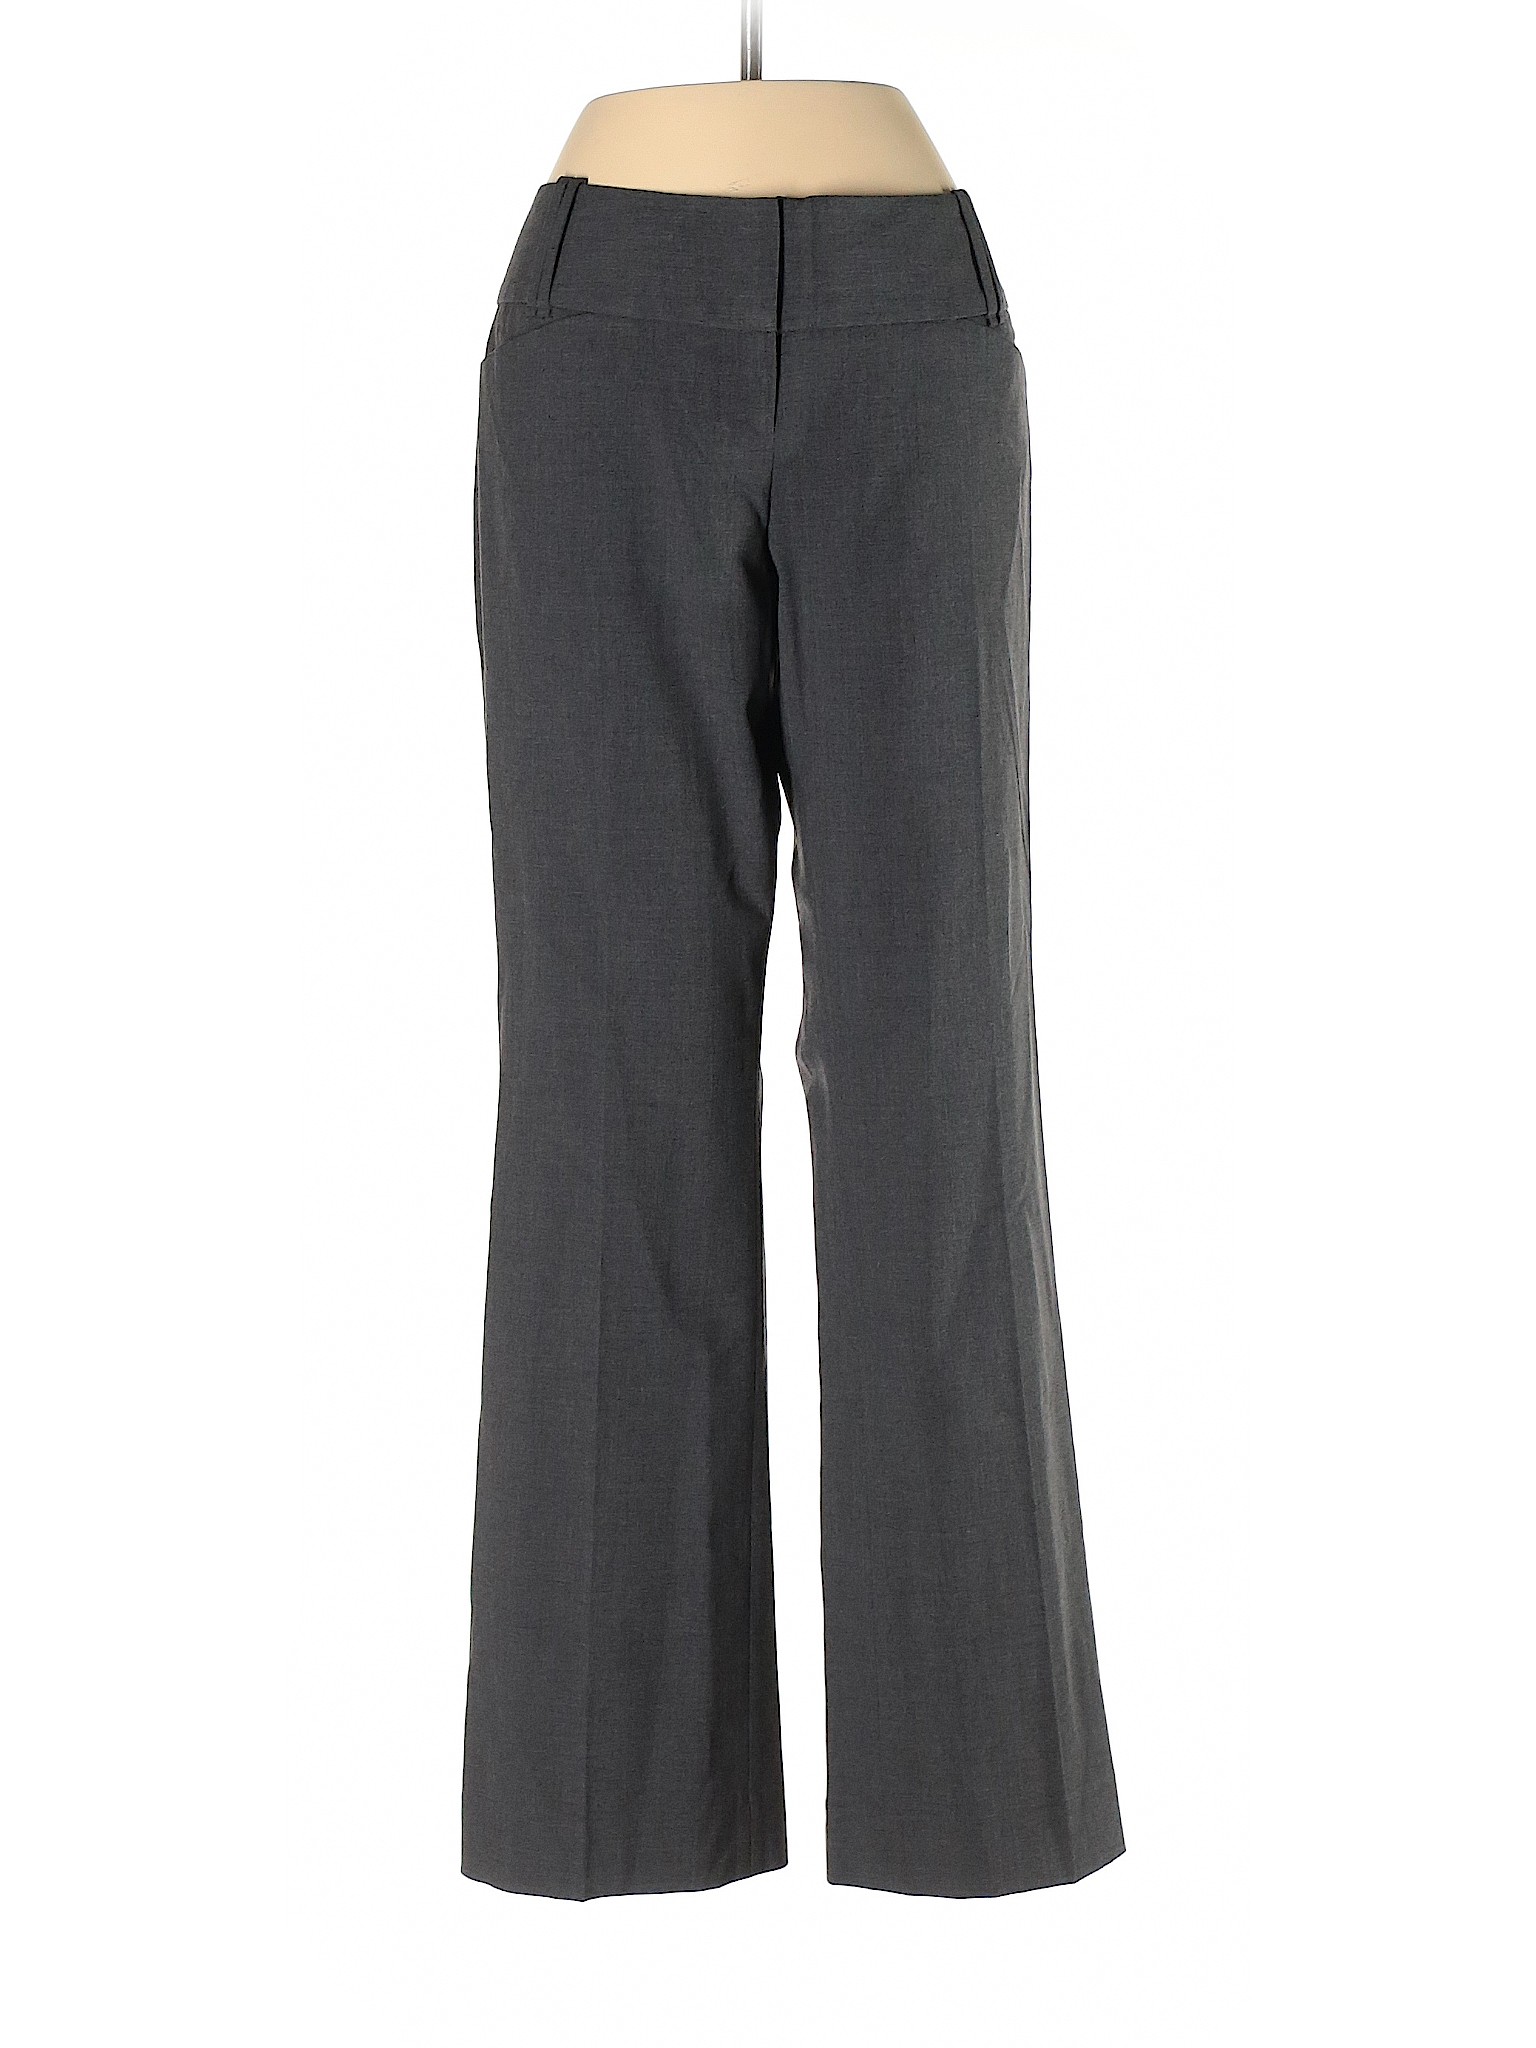 NWT The Limited Women Gray Dress Pants 2 | eBay